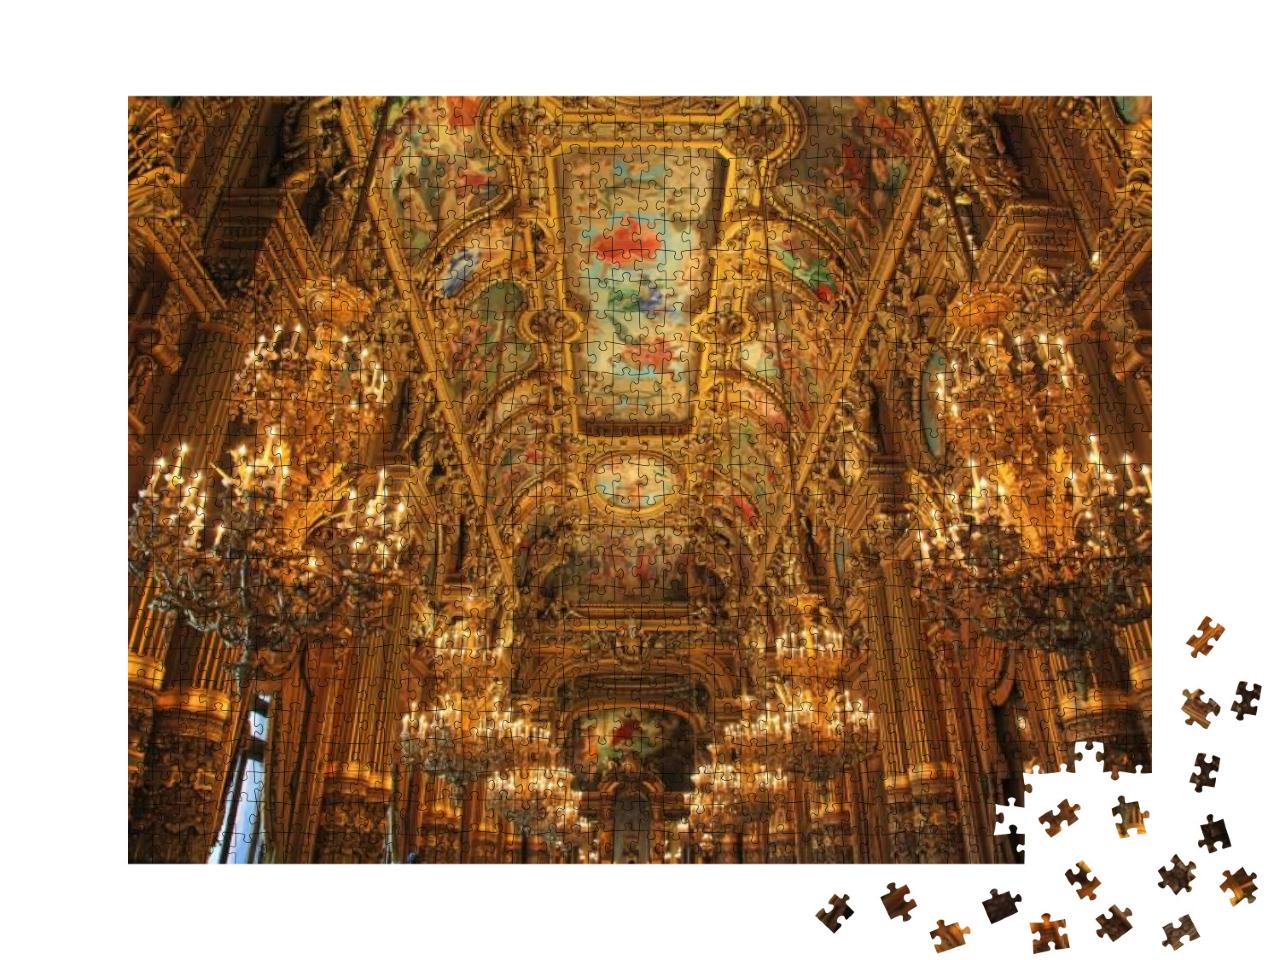 Opera Garnier in France Paris Tourist Destination... Jigsaw Puzzle with 1000 pieces